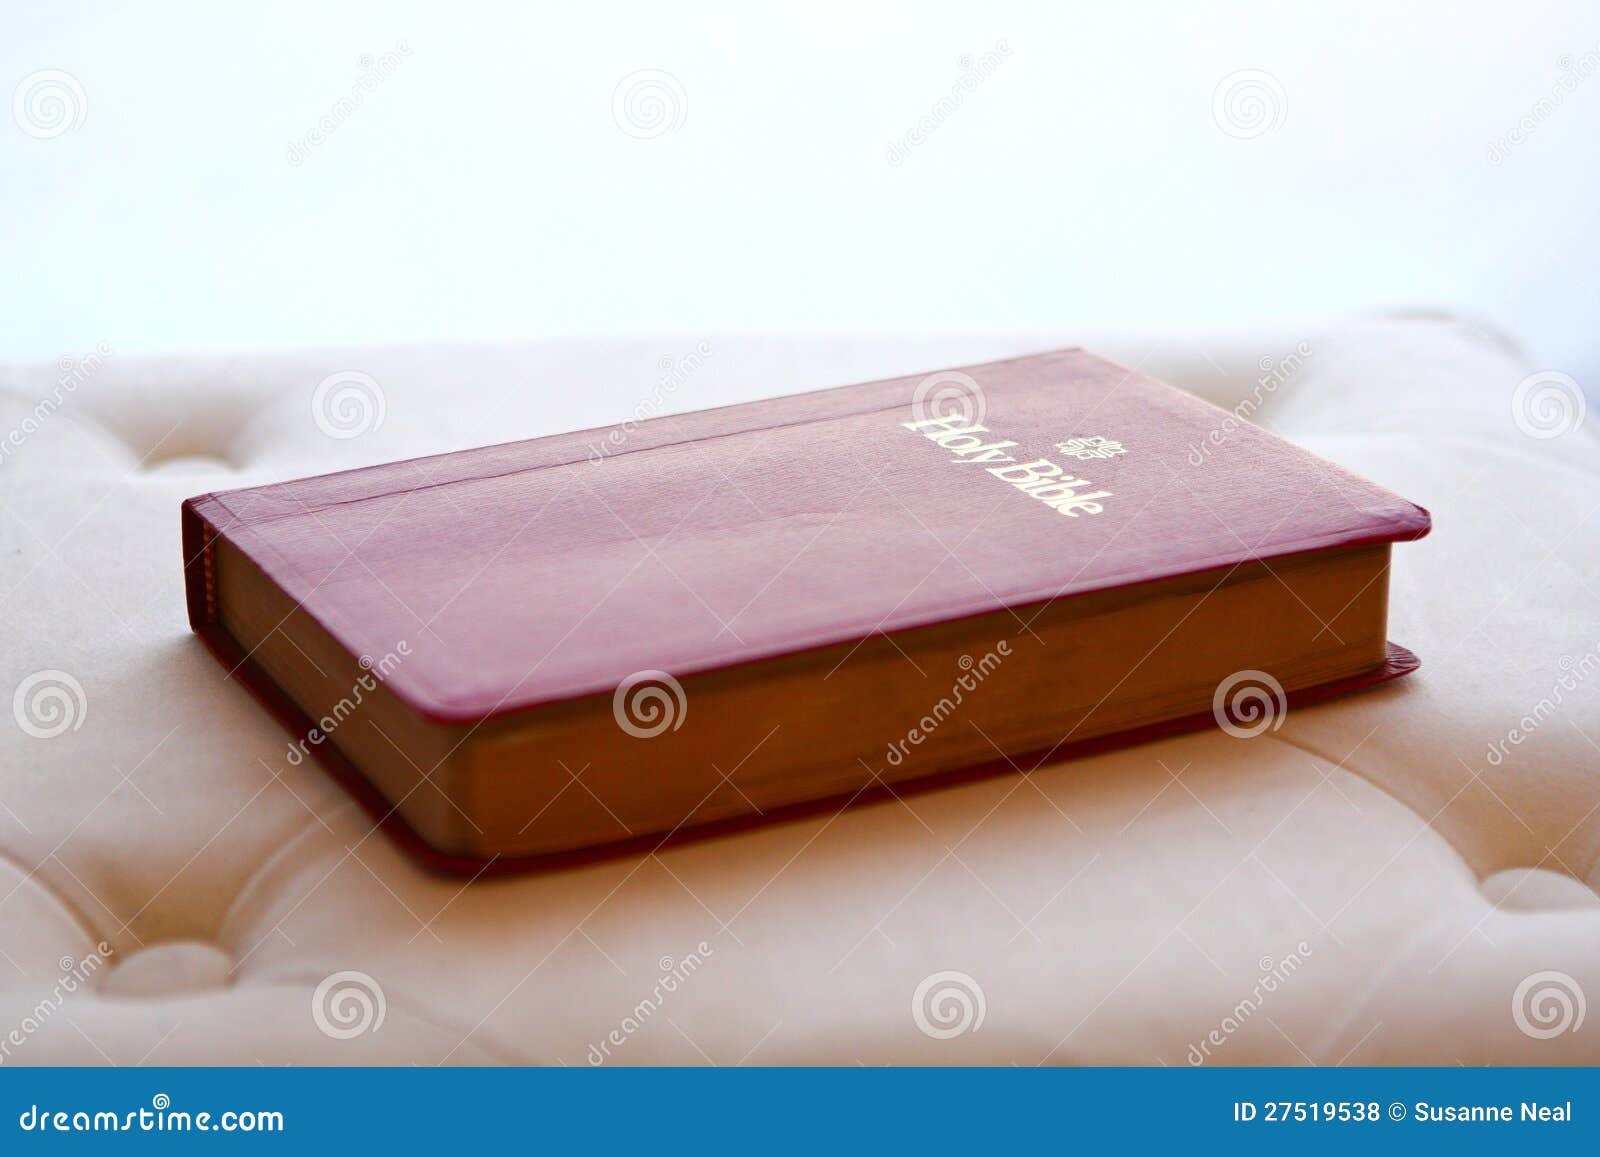 holy bible backlit on ottoman cushion